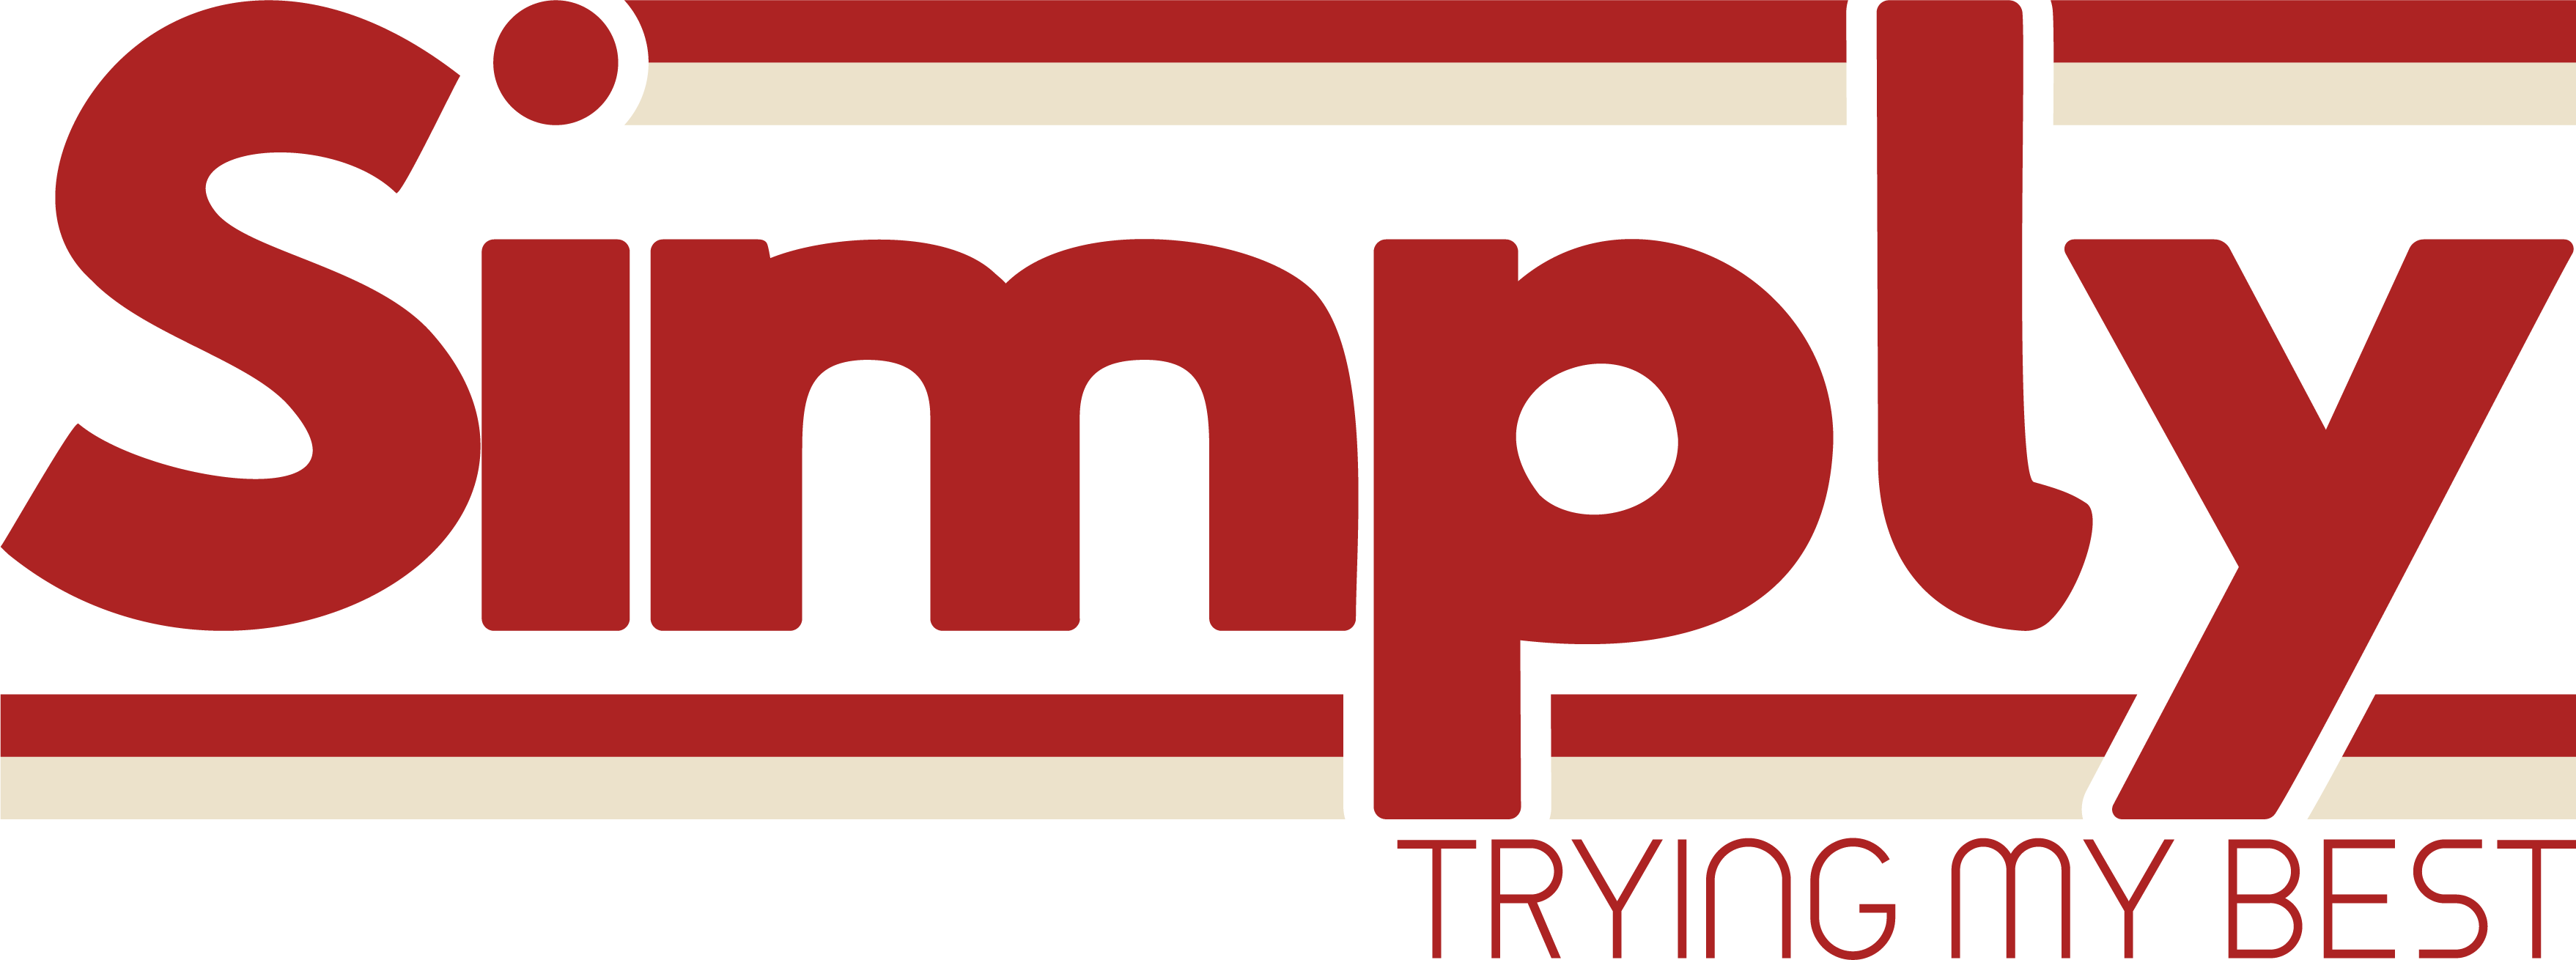 STMB - Retro Red Logo